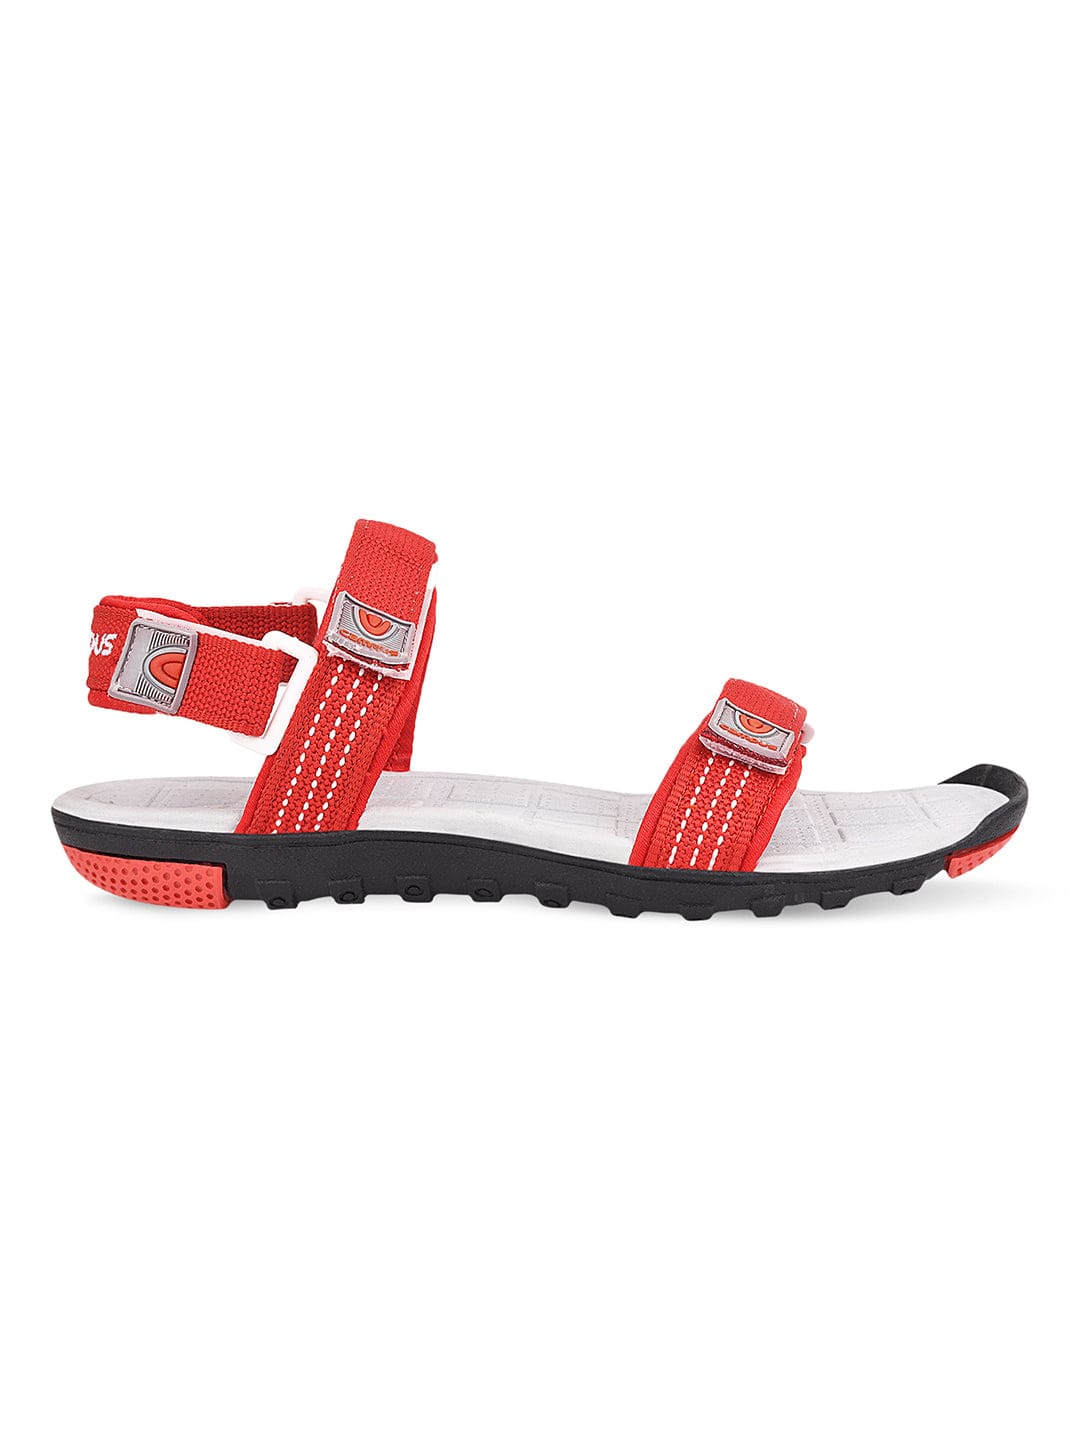 Podiatrists Recommend These OluKai Flip-flops